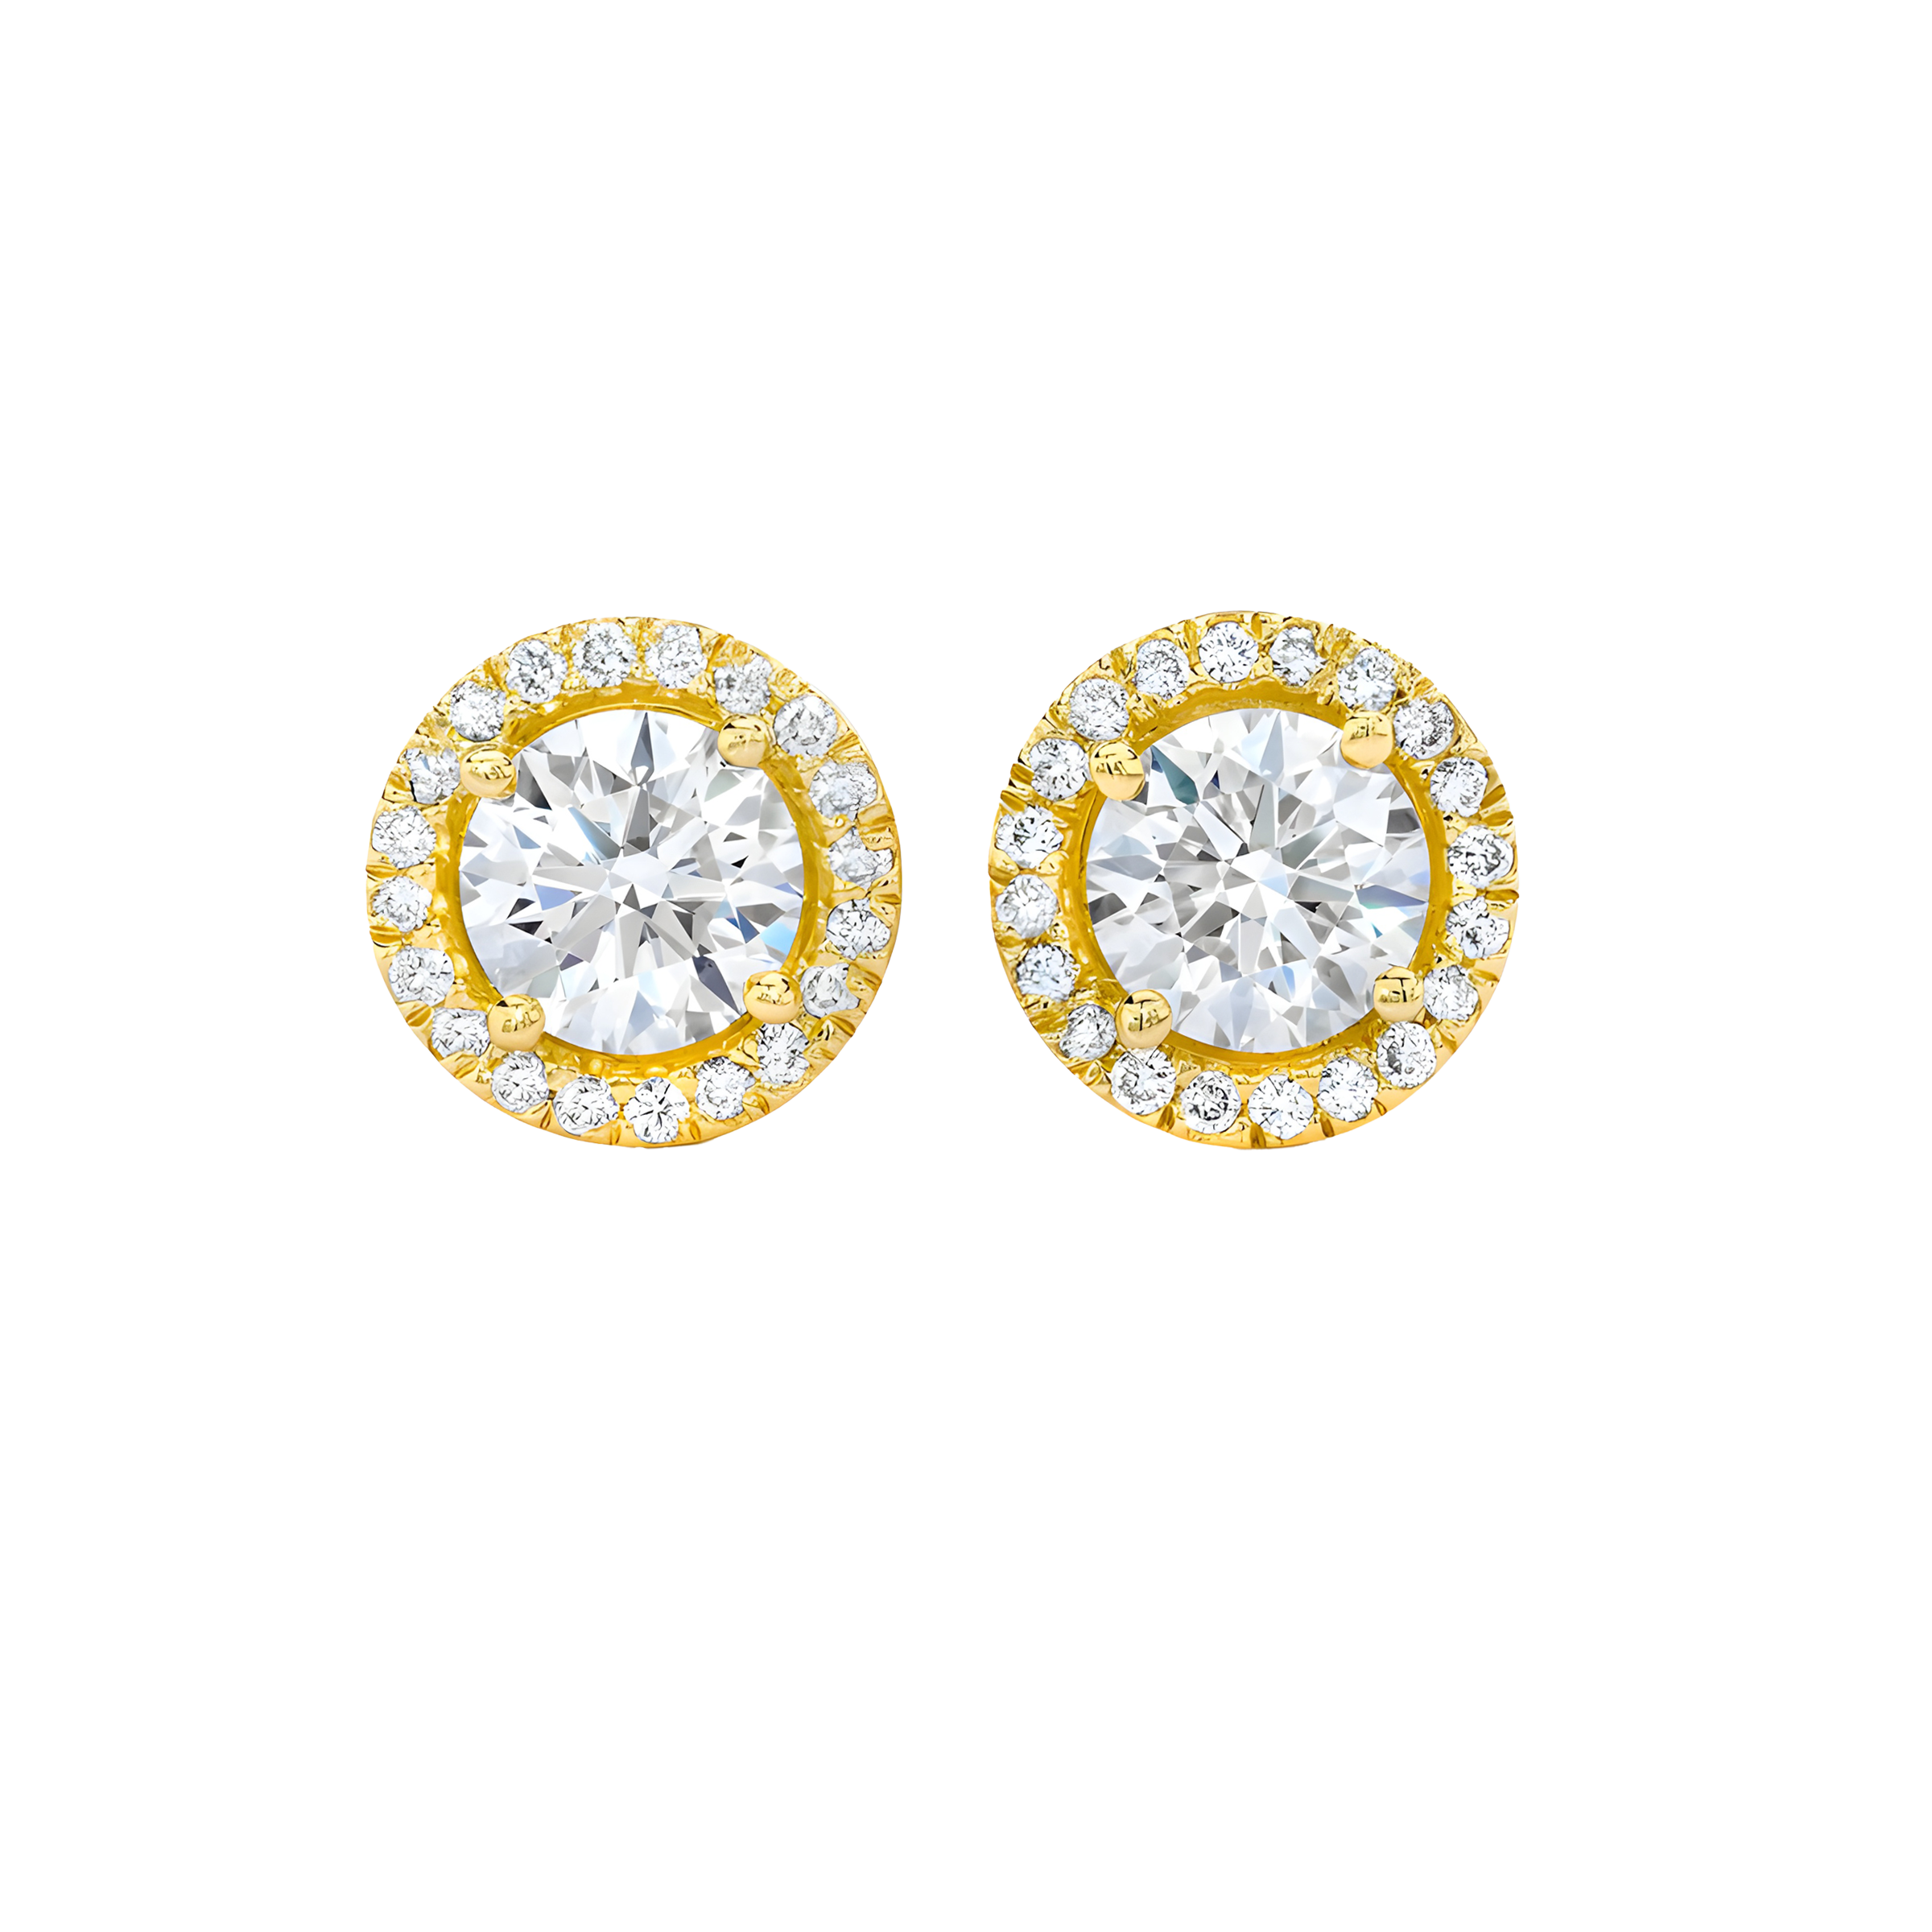 Round Diamond Halo Stud Earrings in 18k Yellow Gold